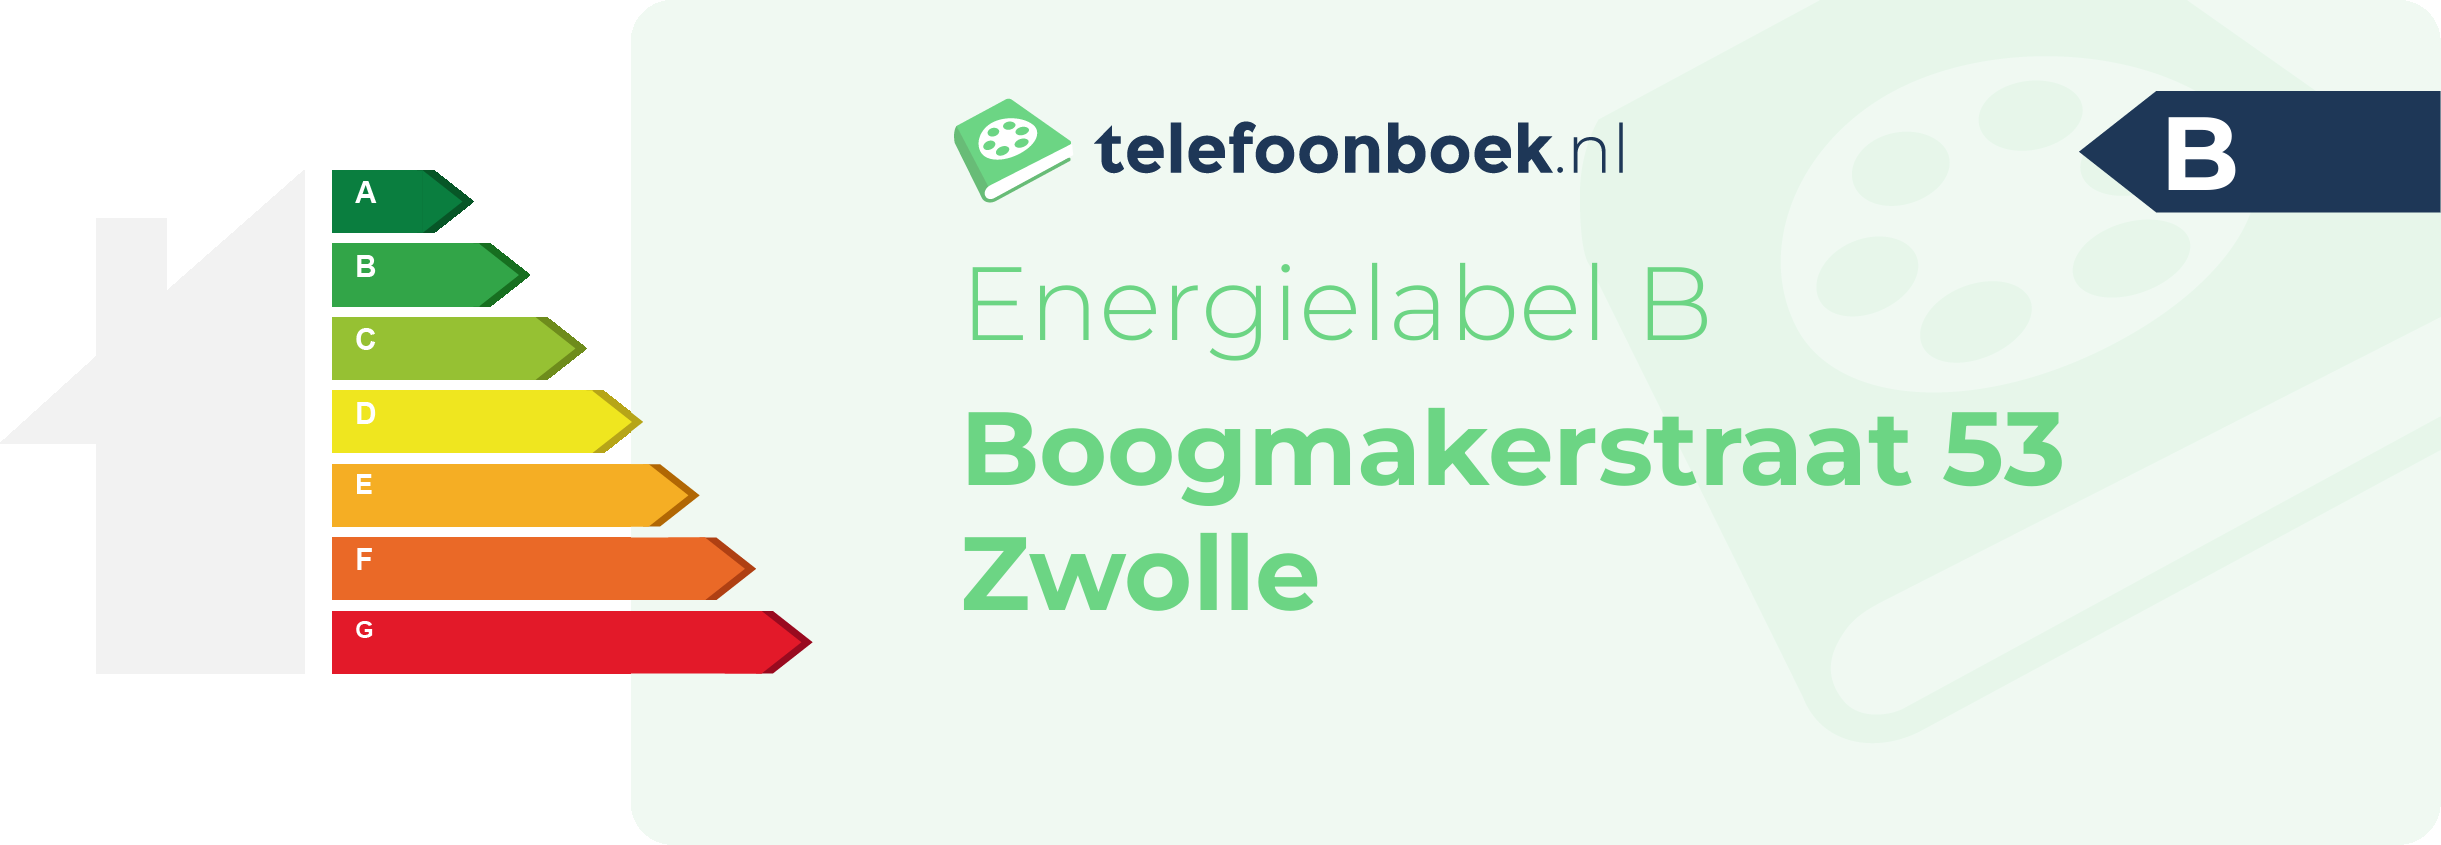 Energielabel Boogmakerstraat 53 Zwolle